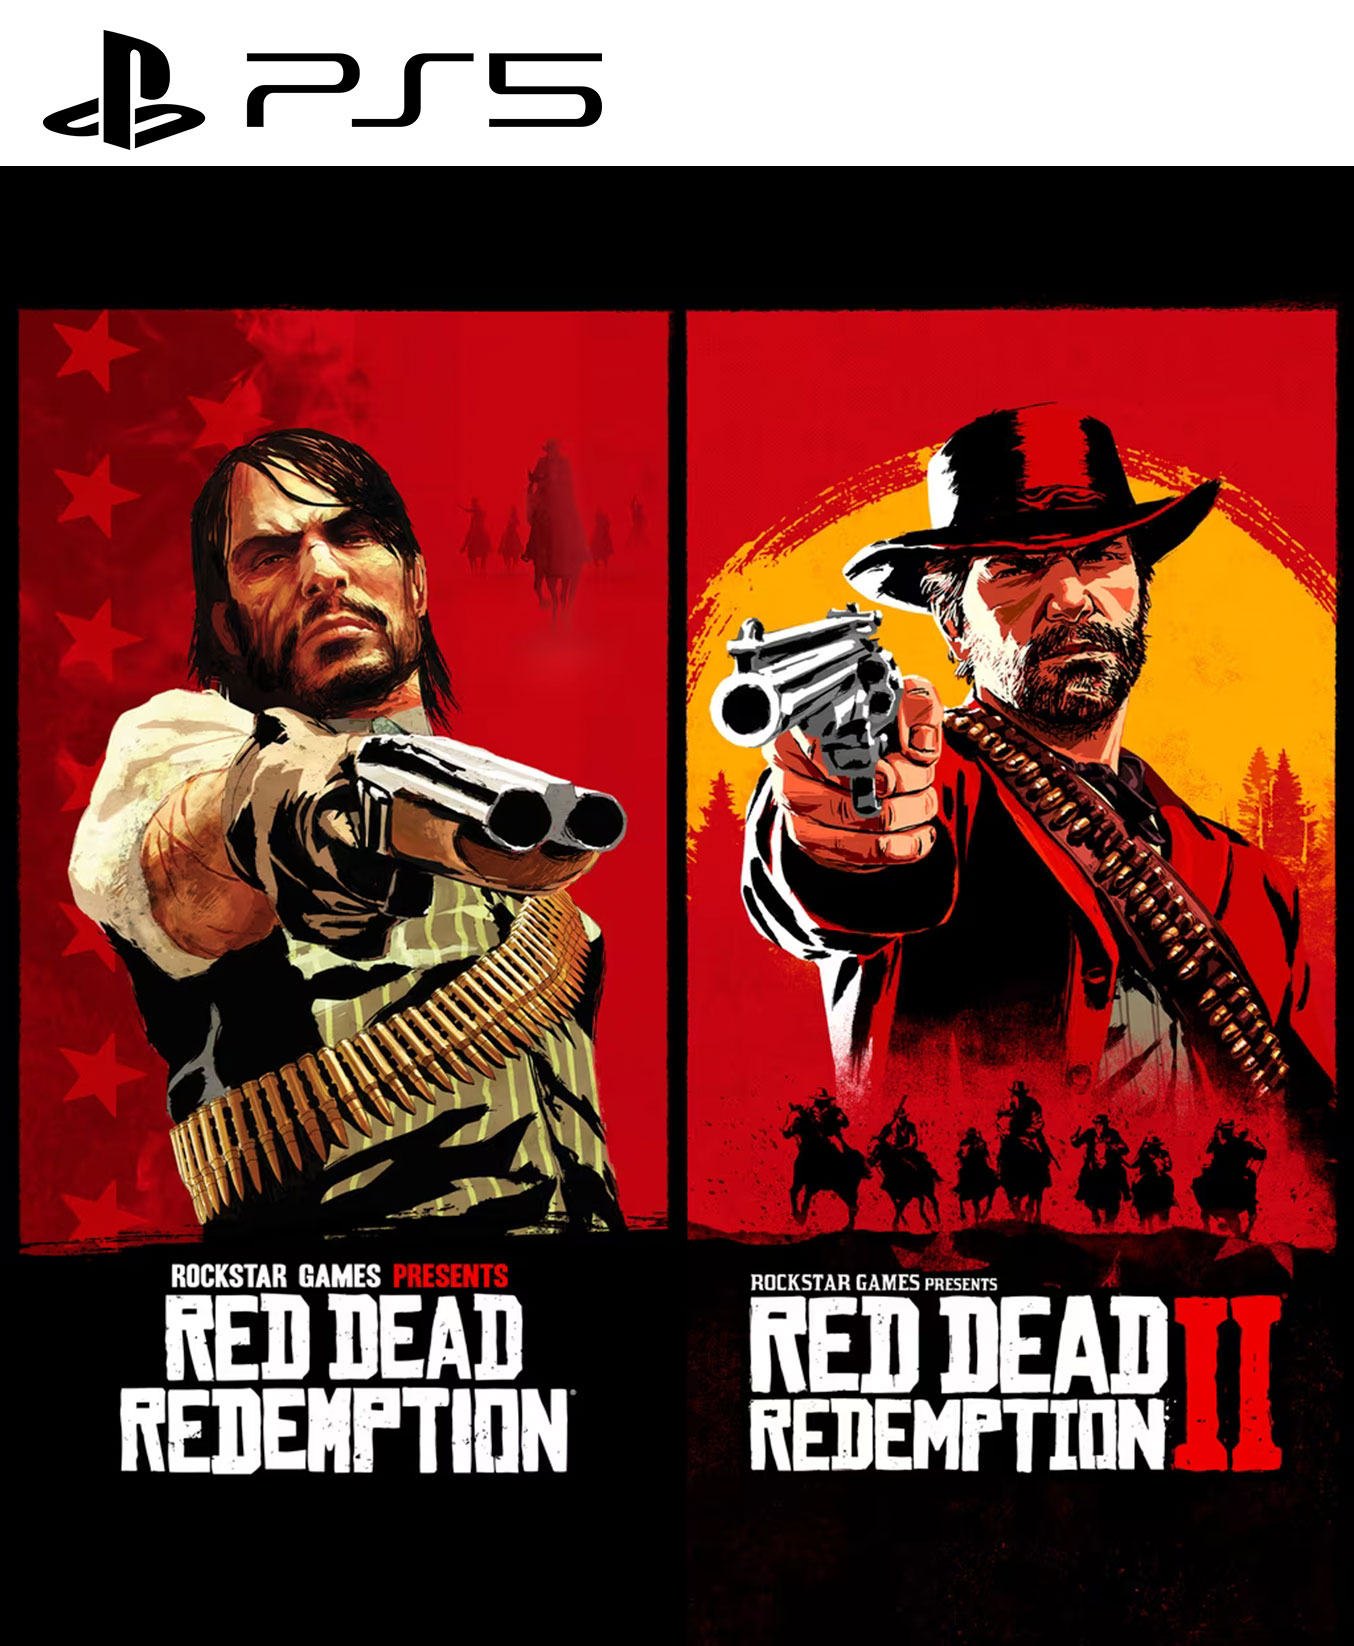 Red Dead Redemption 2 PS4, Juegos Digitales Chile